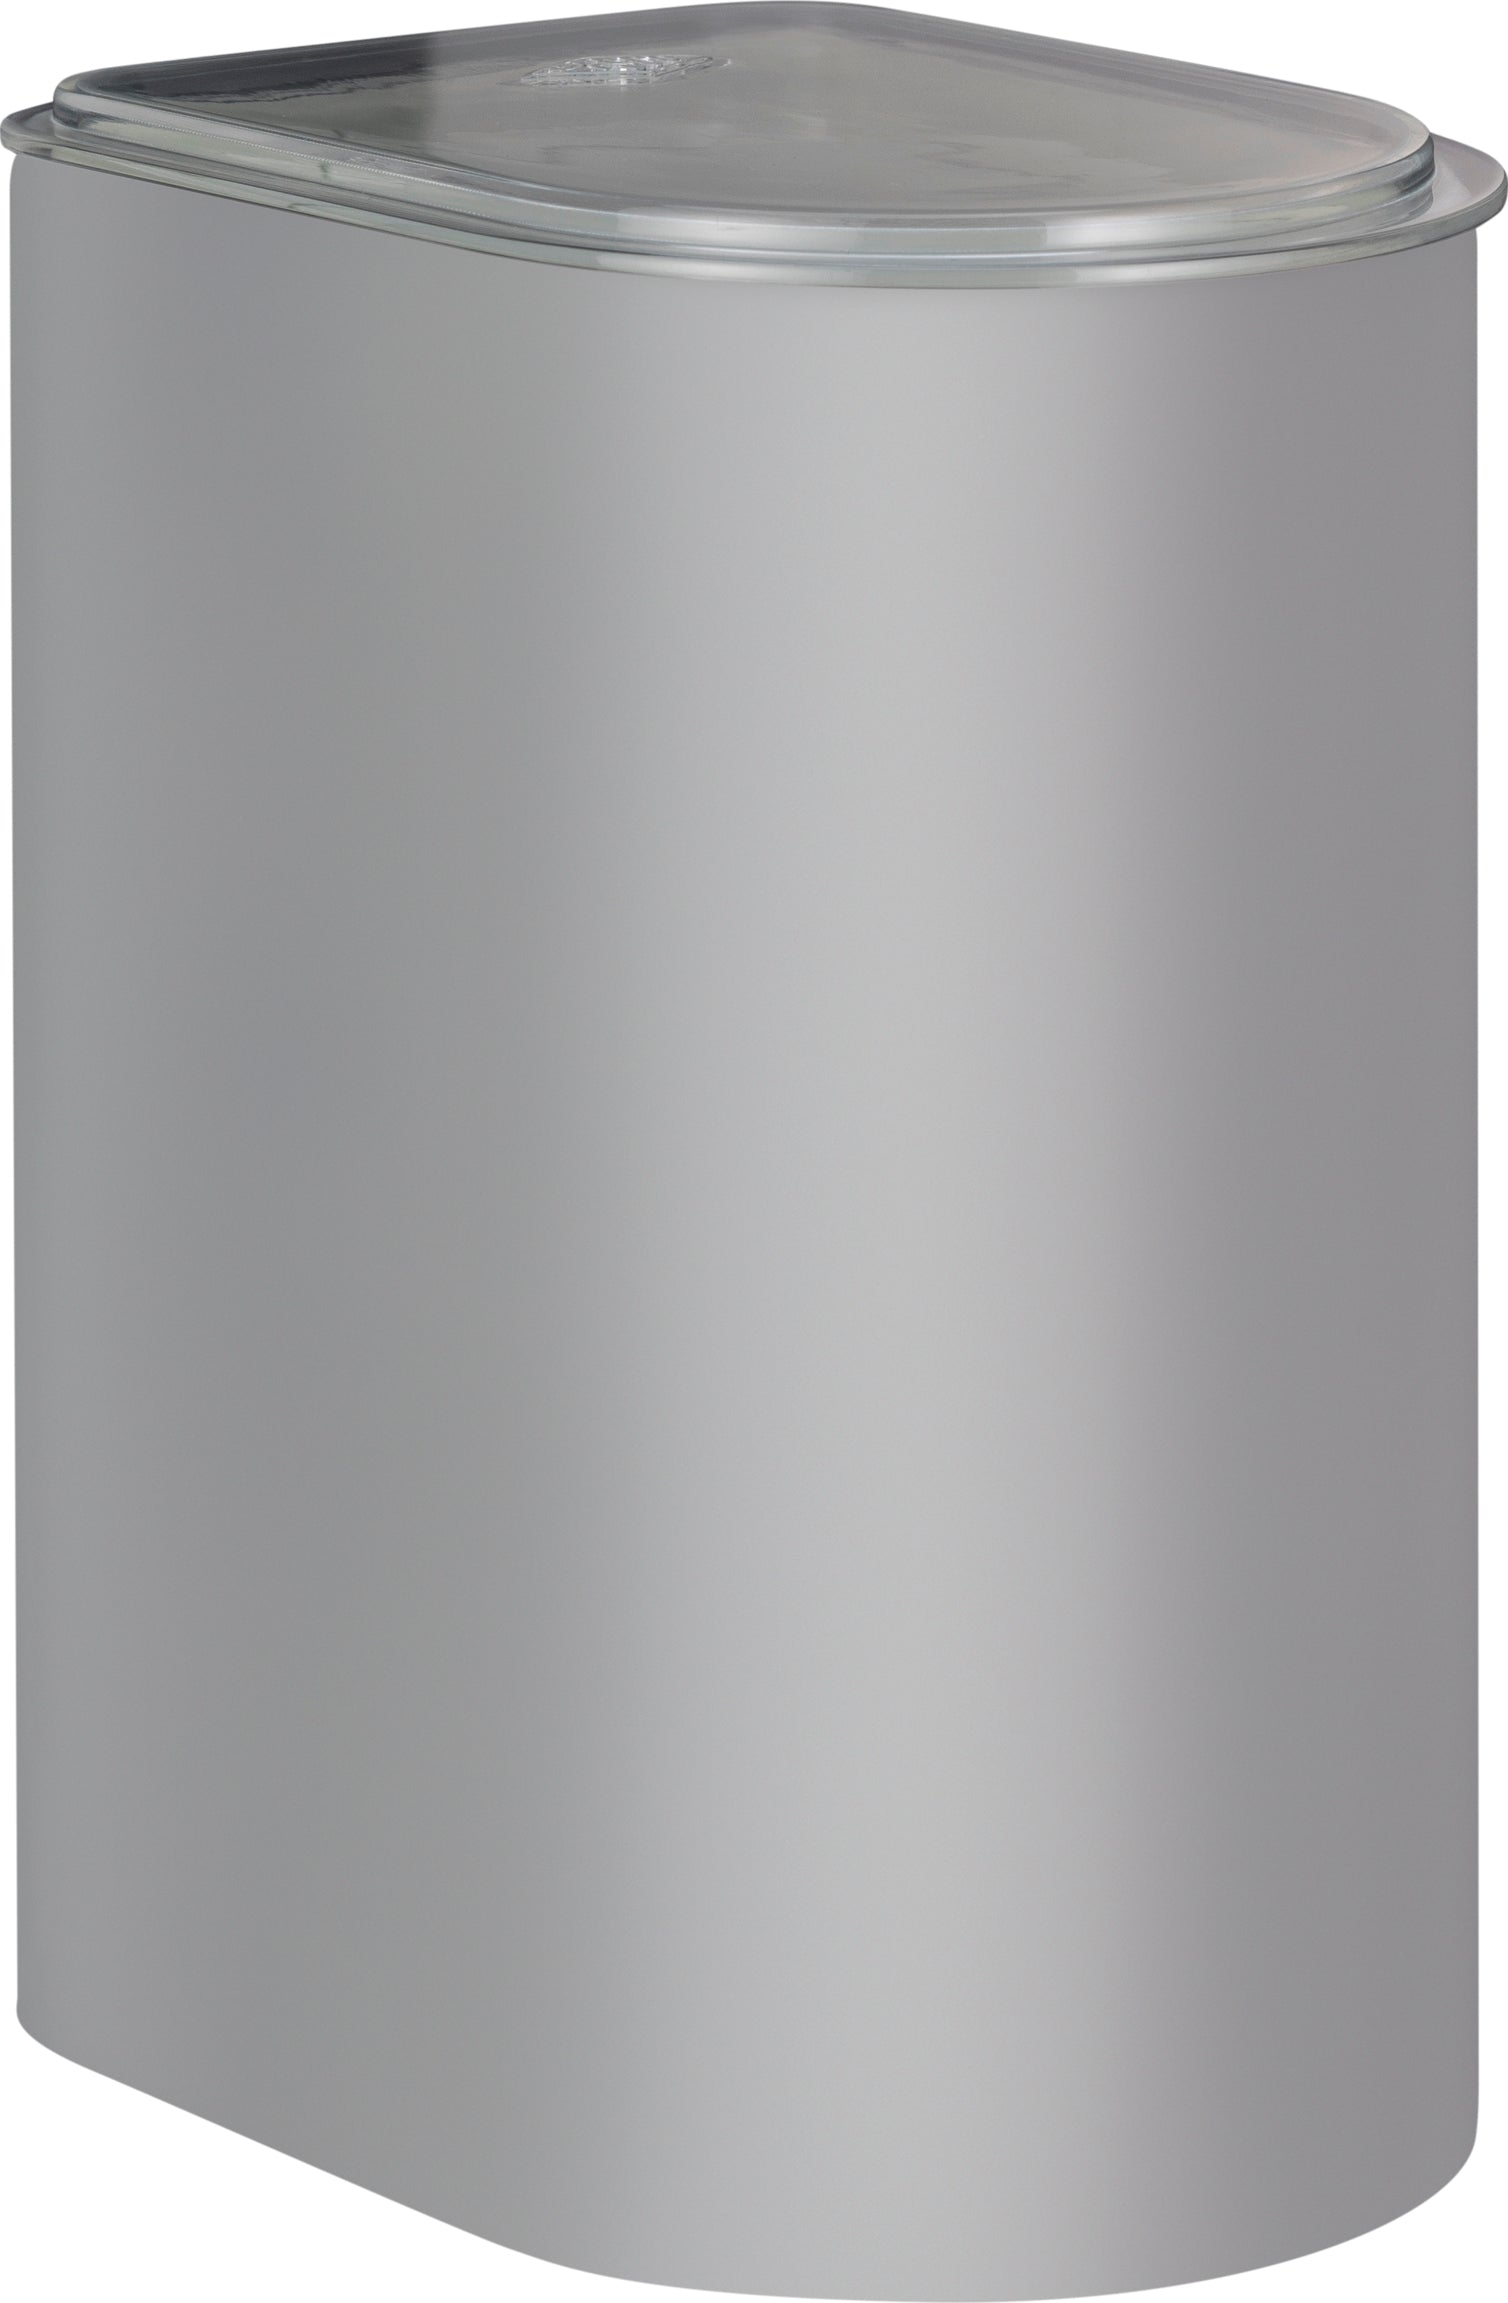 Wesco Canister 3 Liter mit Acryldeckel, cooler grauer Matt